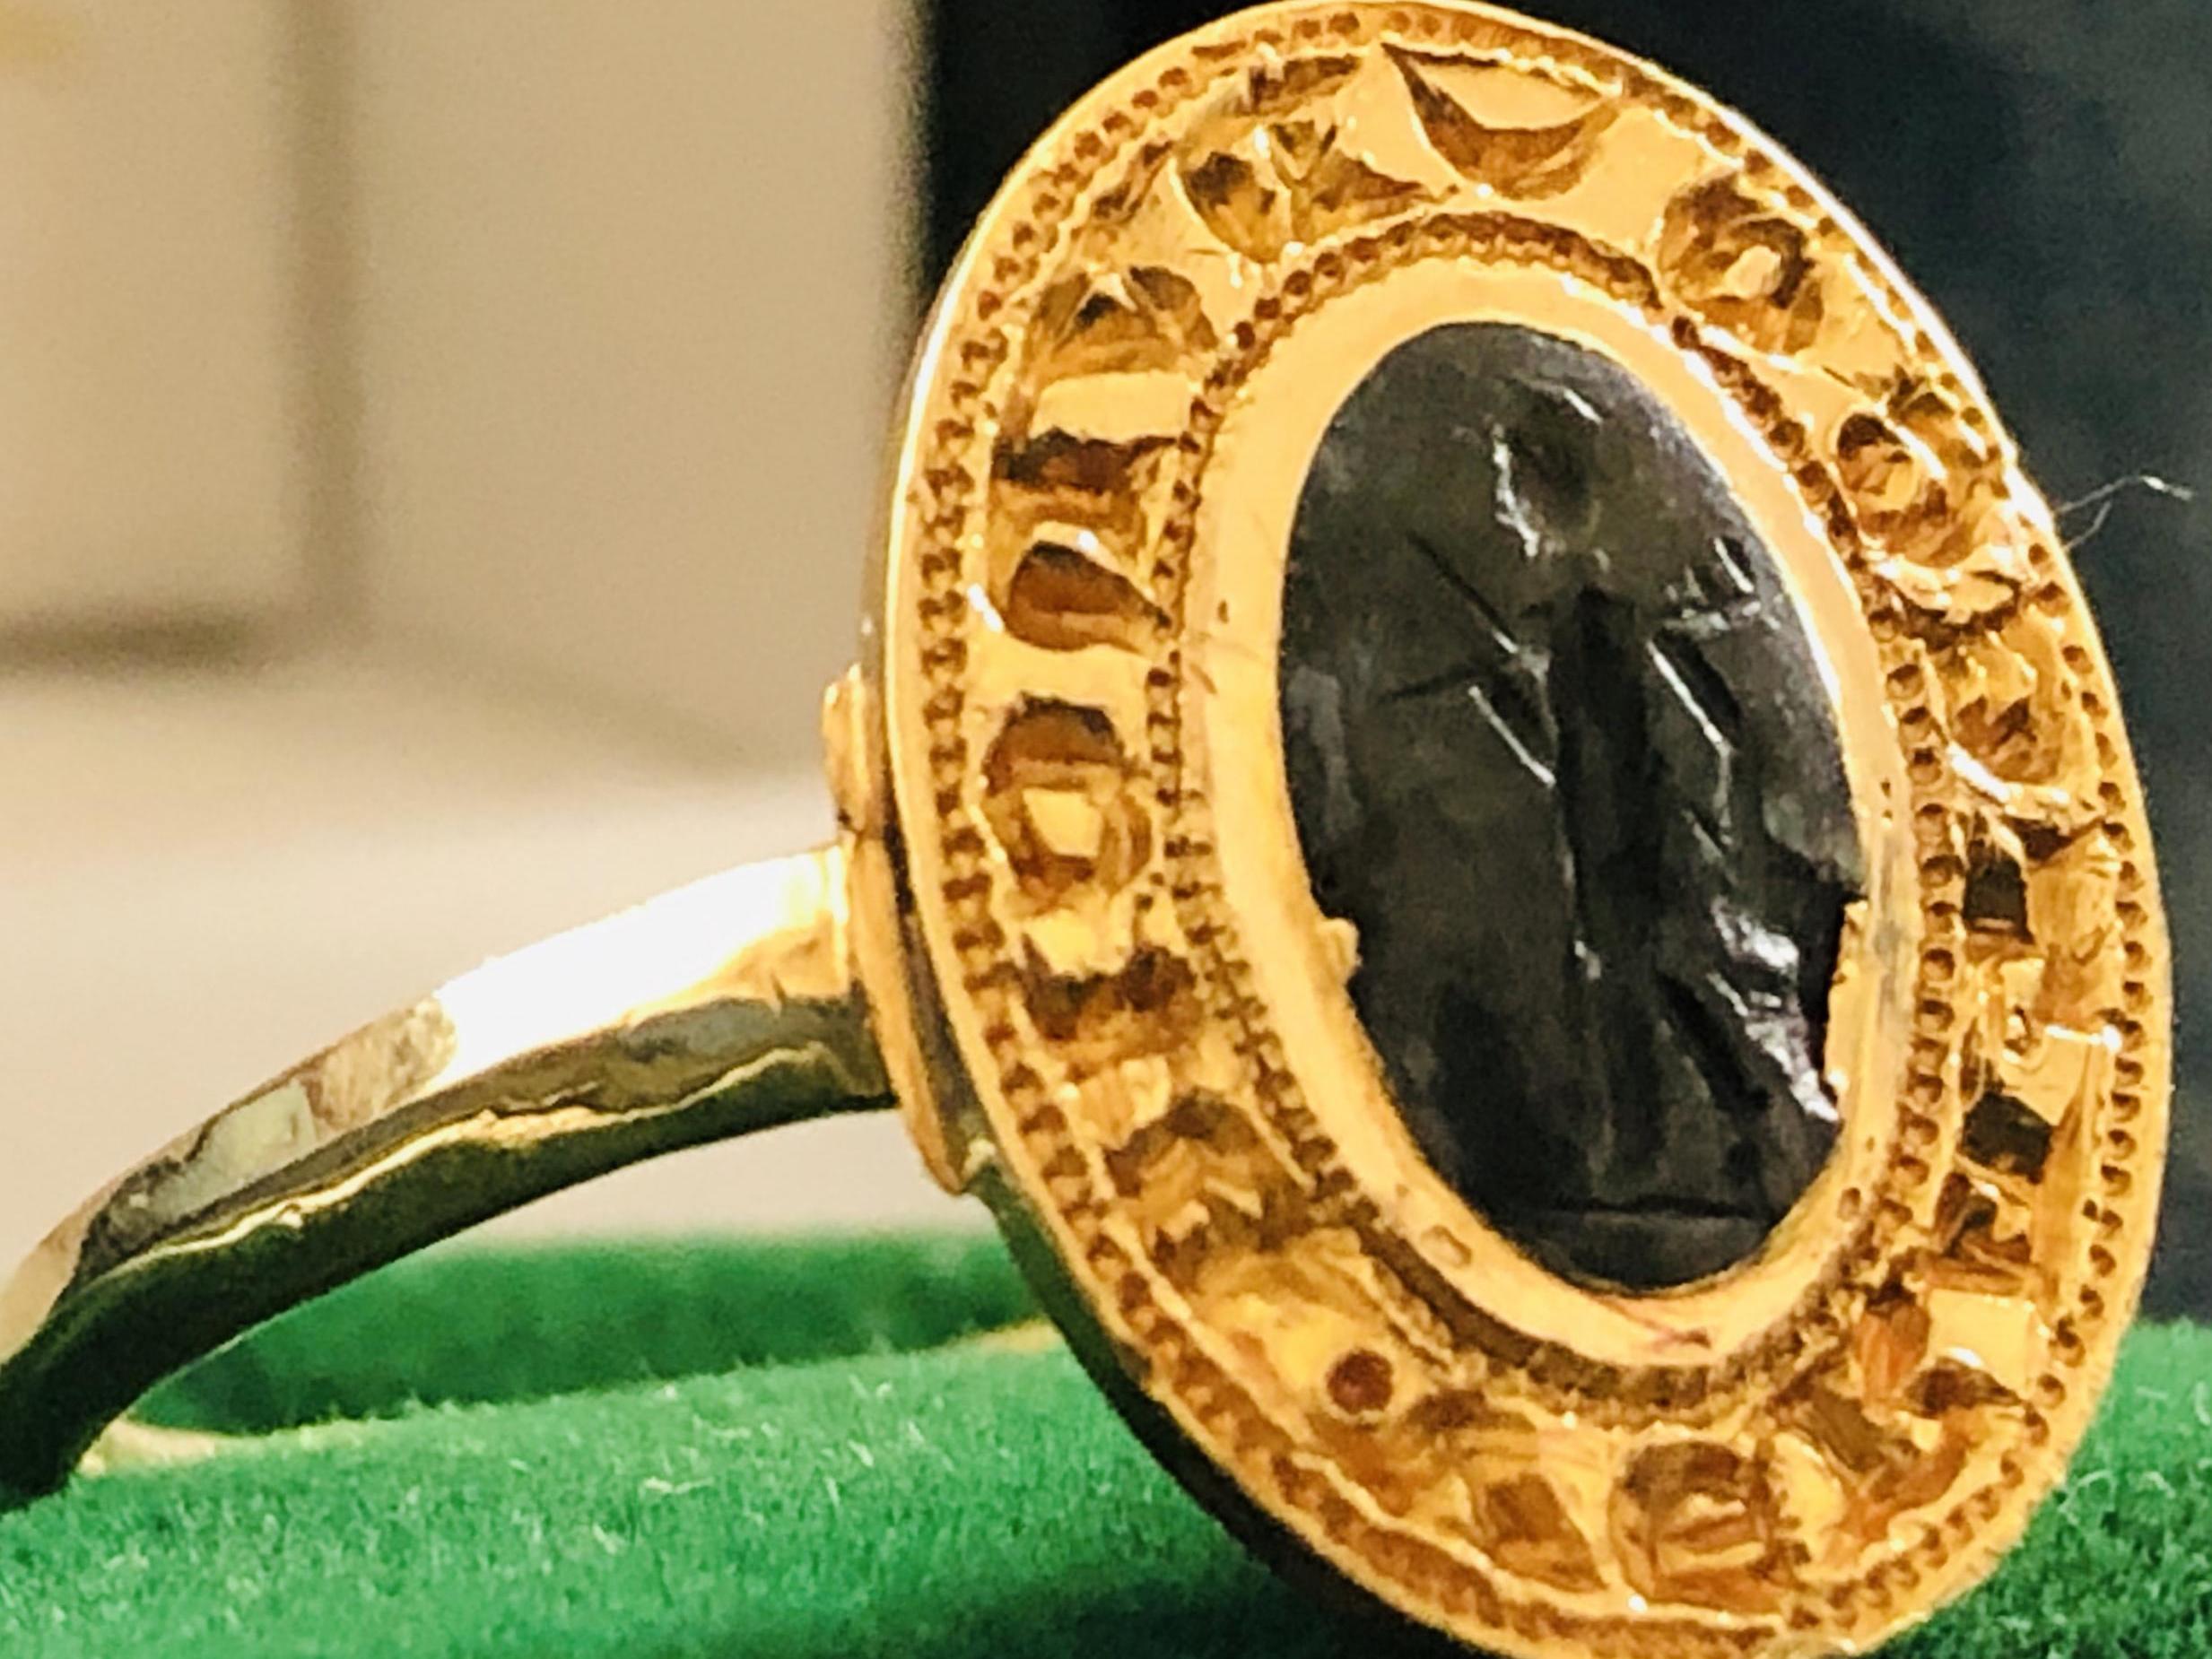 Very old Ring Gold Price. Фото монеты со времен короля Эллы. Кольцо оказалось золотым